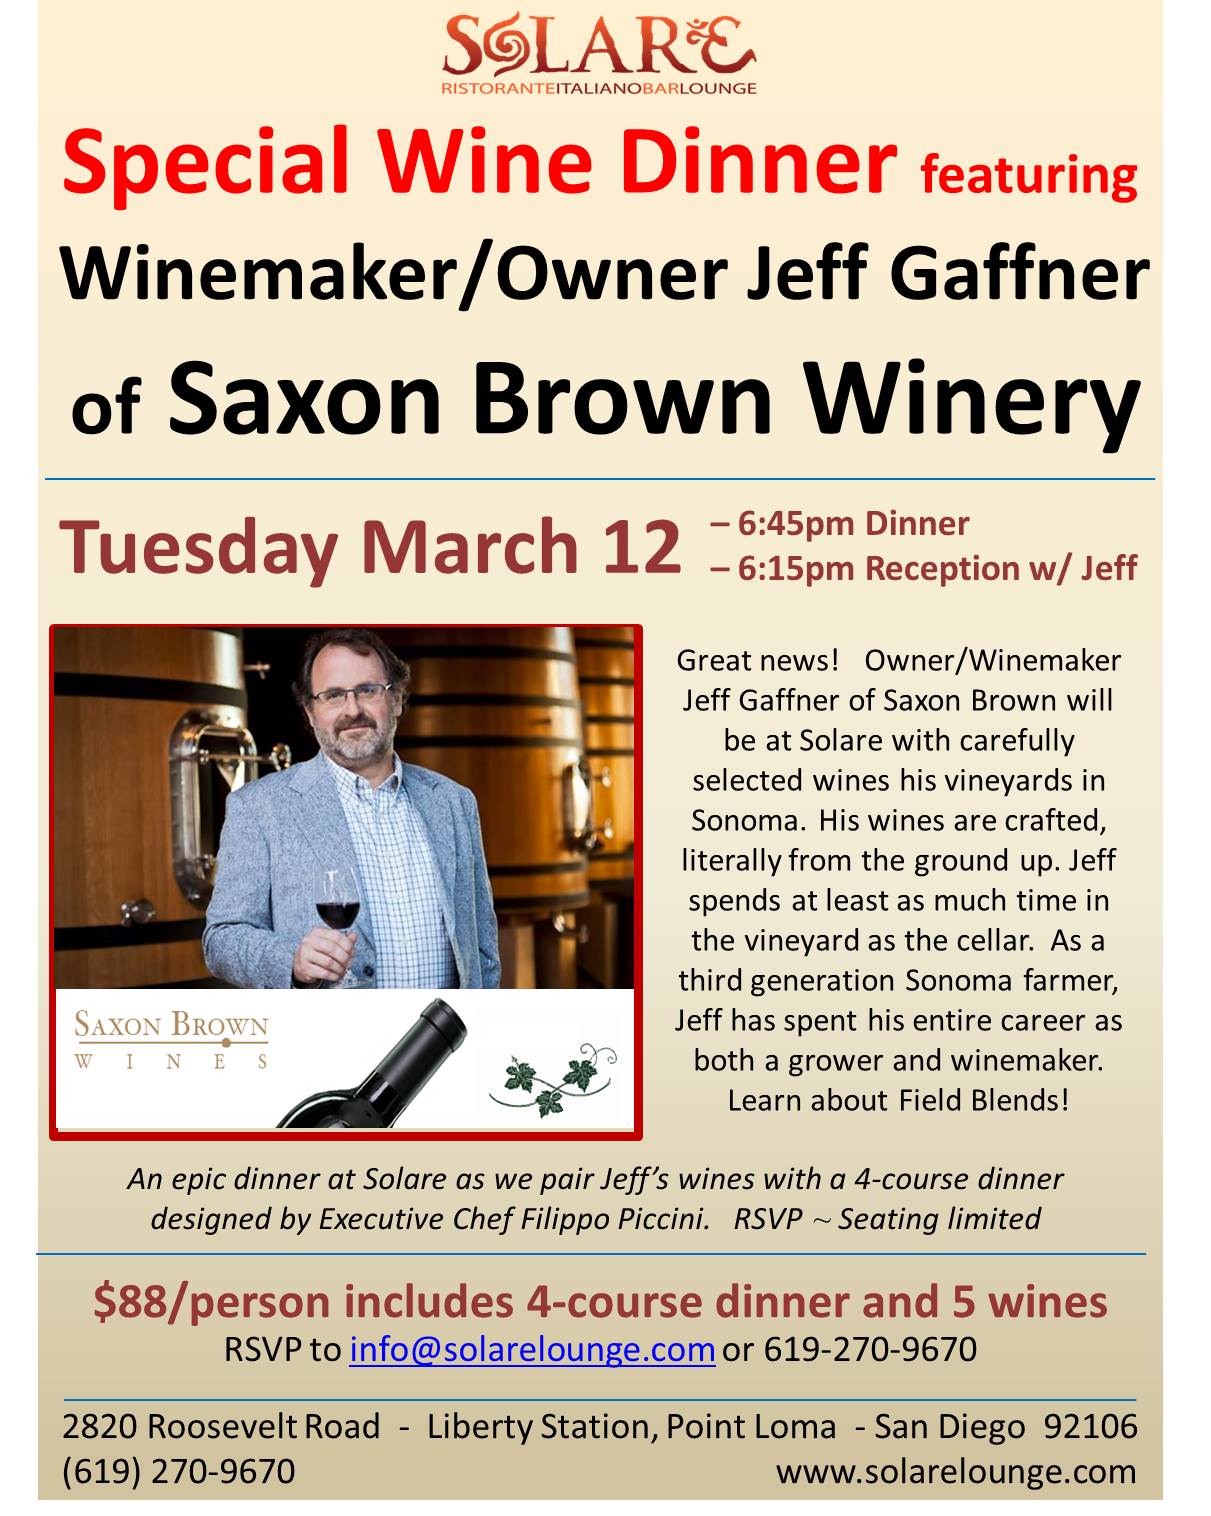 <a id="Solare-Saxon-Brown-Wine-Dinner"></a>A Special Wine Dinner with Jeff Gaffner of Saxon Brown